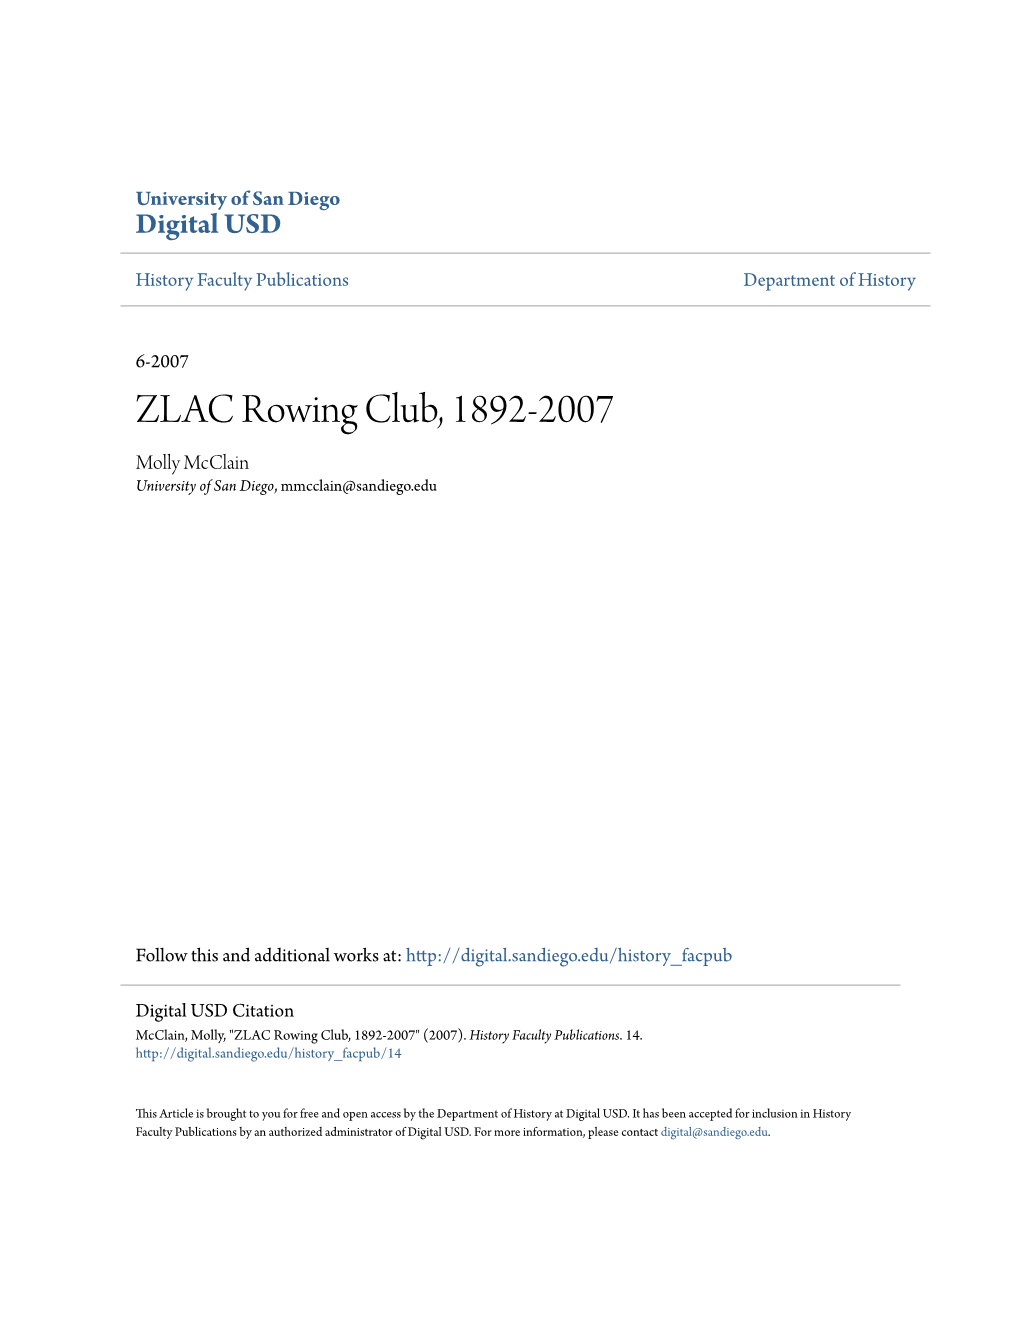 ZLAC Rowing Club, 1892-2007 Molly Mcclain University of San Diego, Mmcclain@Sandiego.Edu